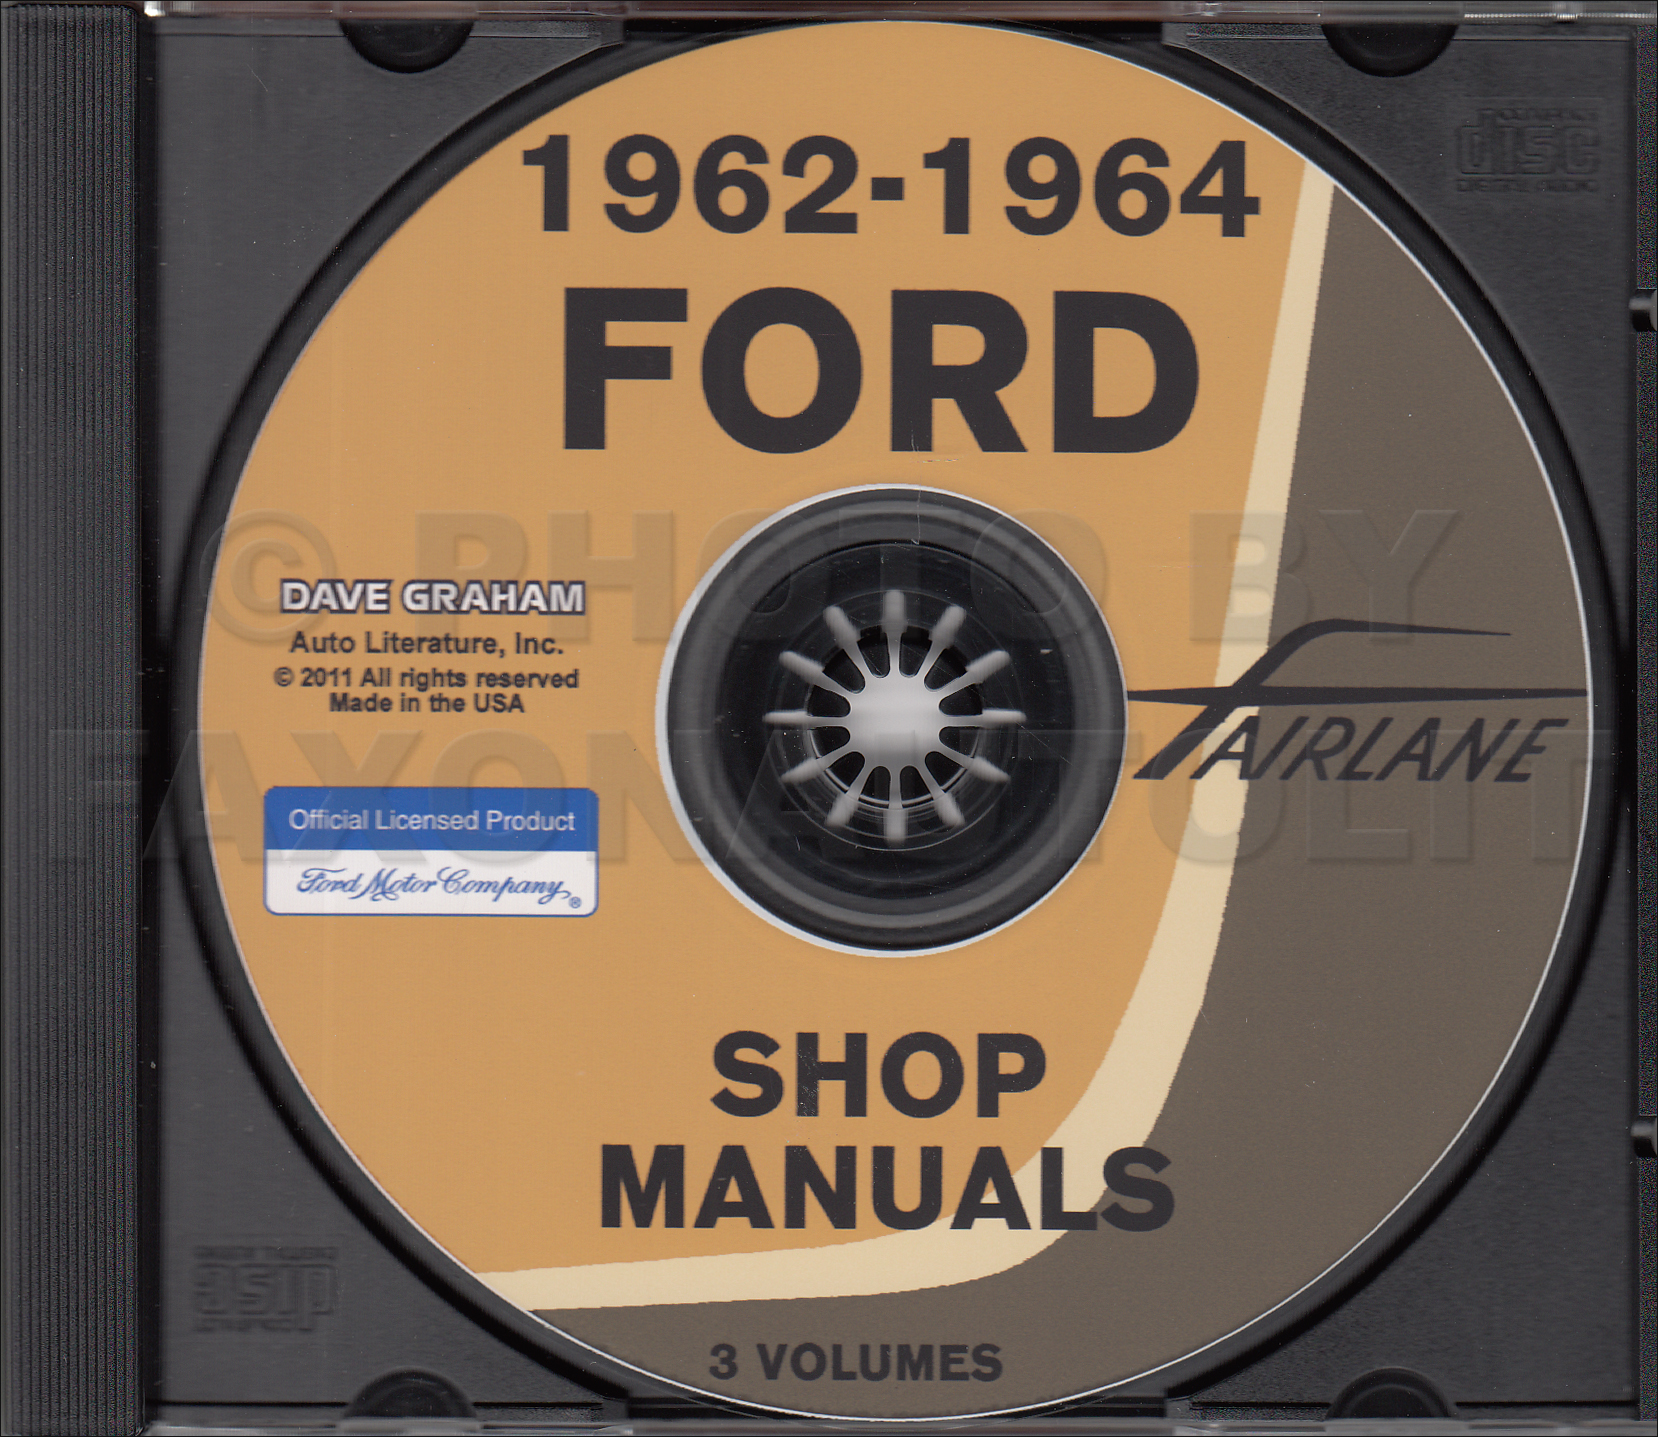 1960 Ford Car CD-ROM Shop Manual 